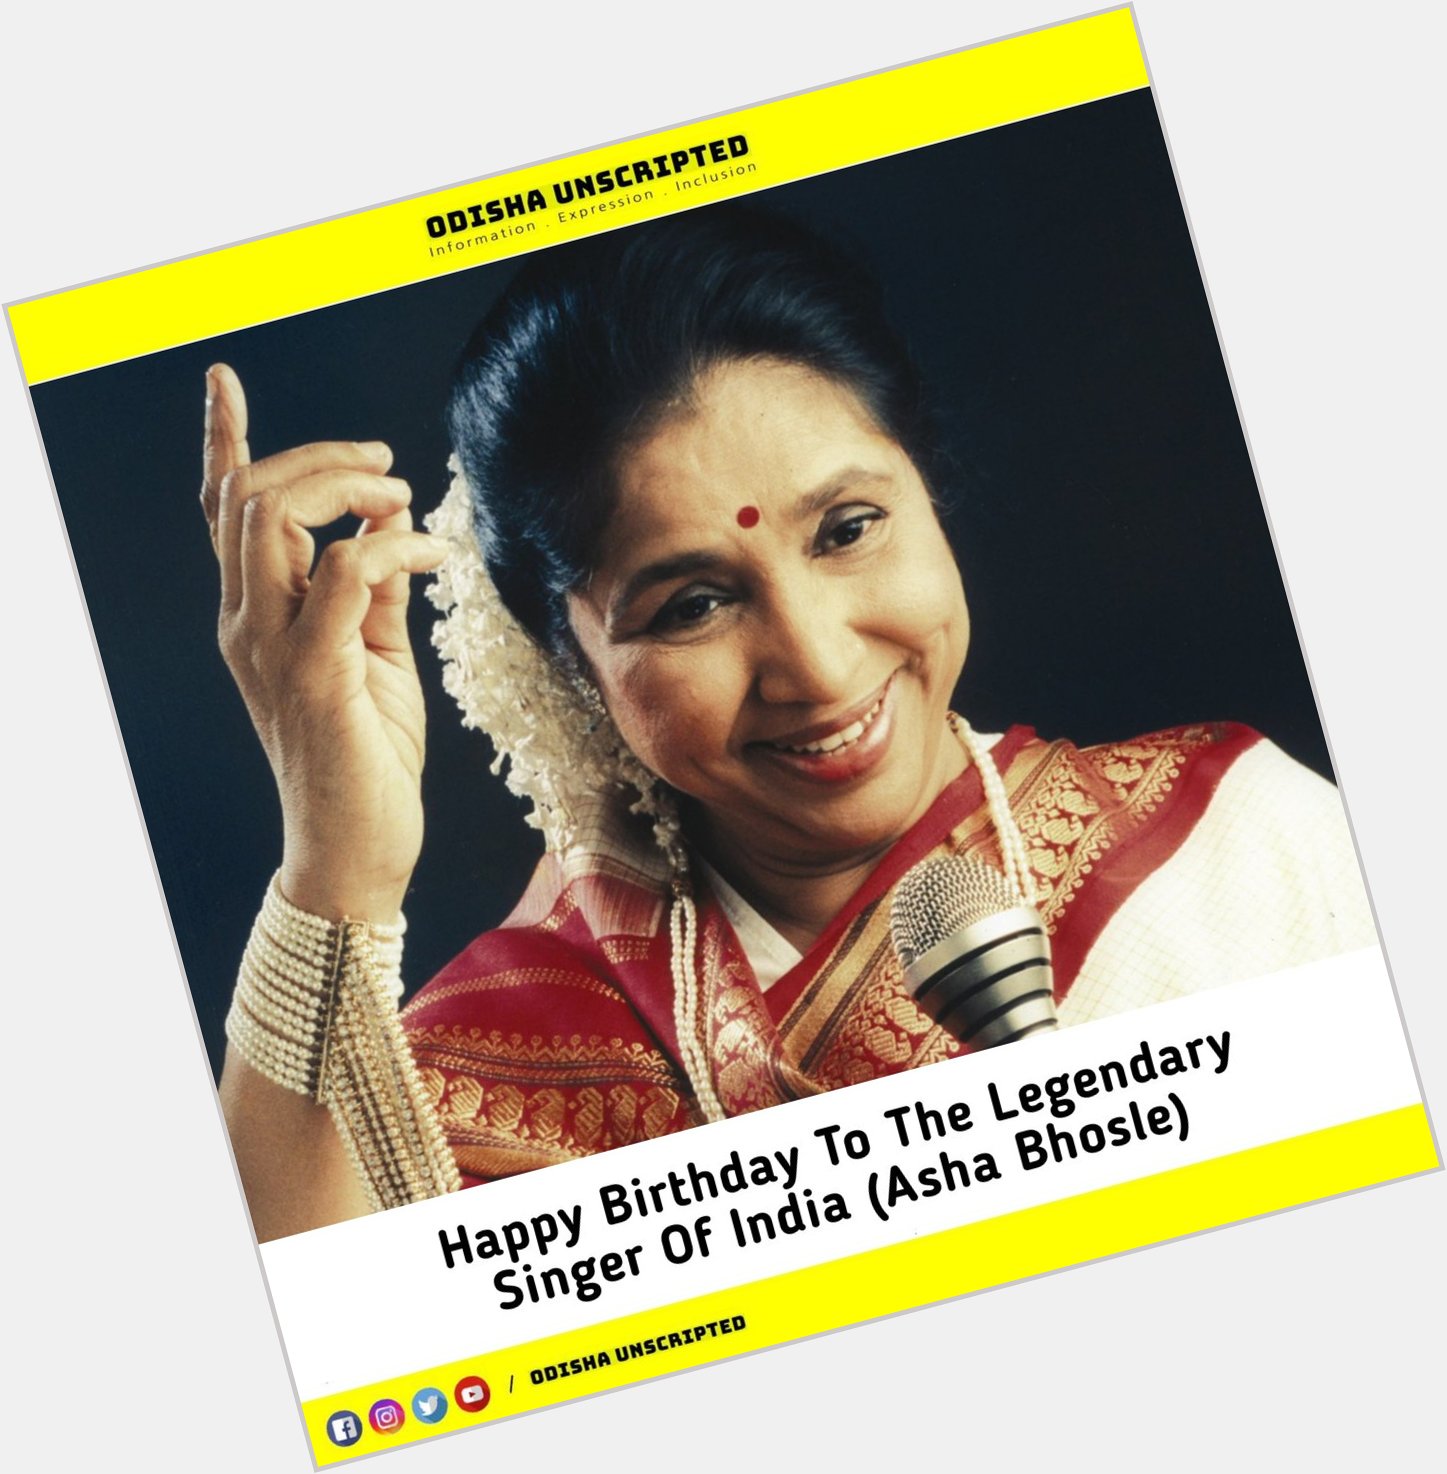 Happy Birthday To The Legendary Singer Of India (Asha Bhosle)   